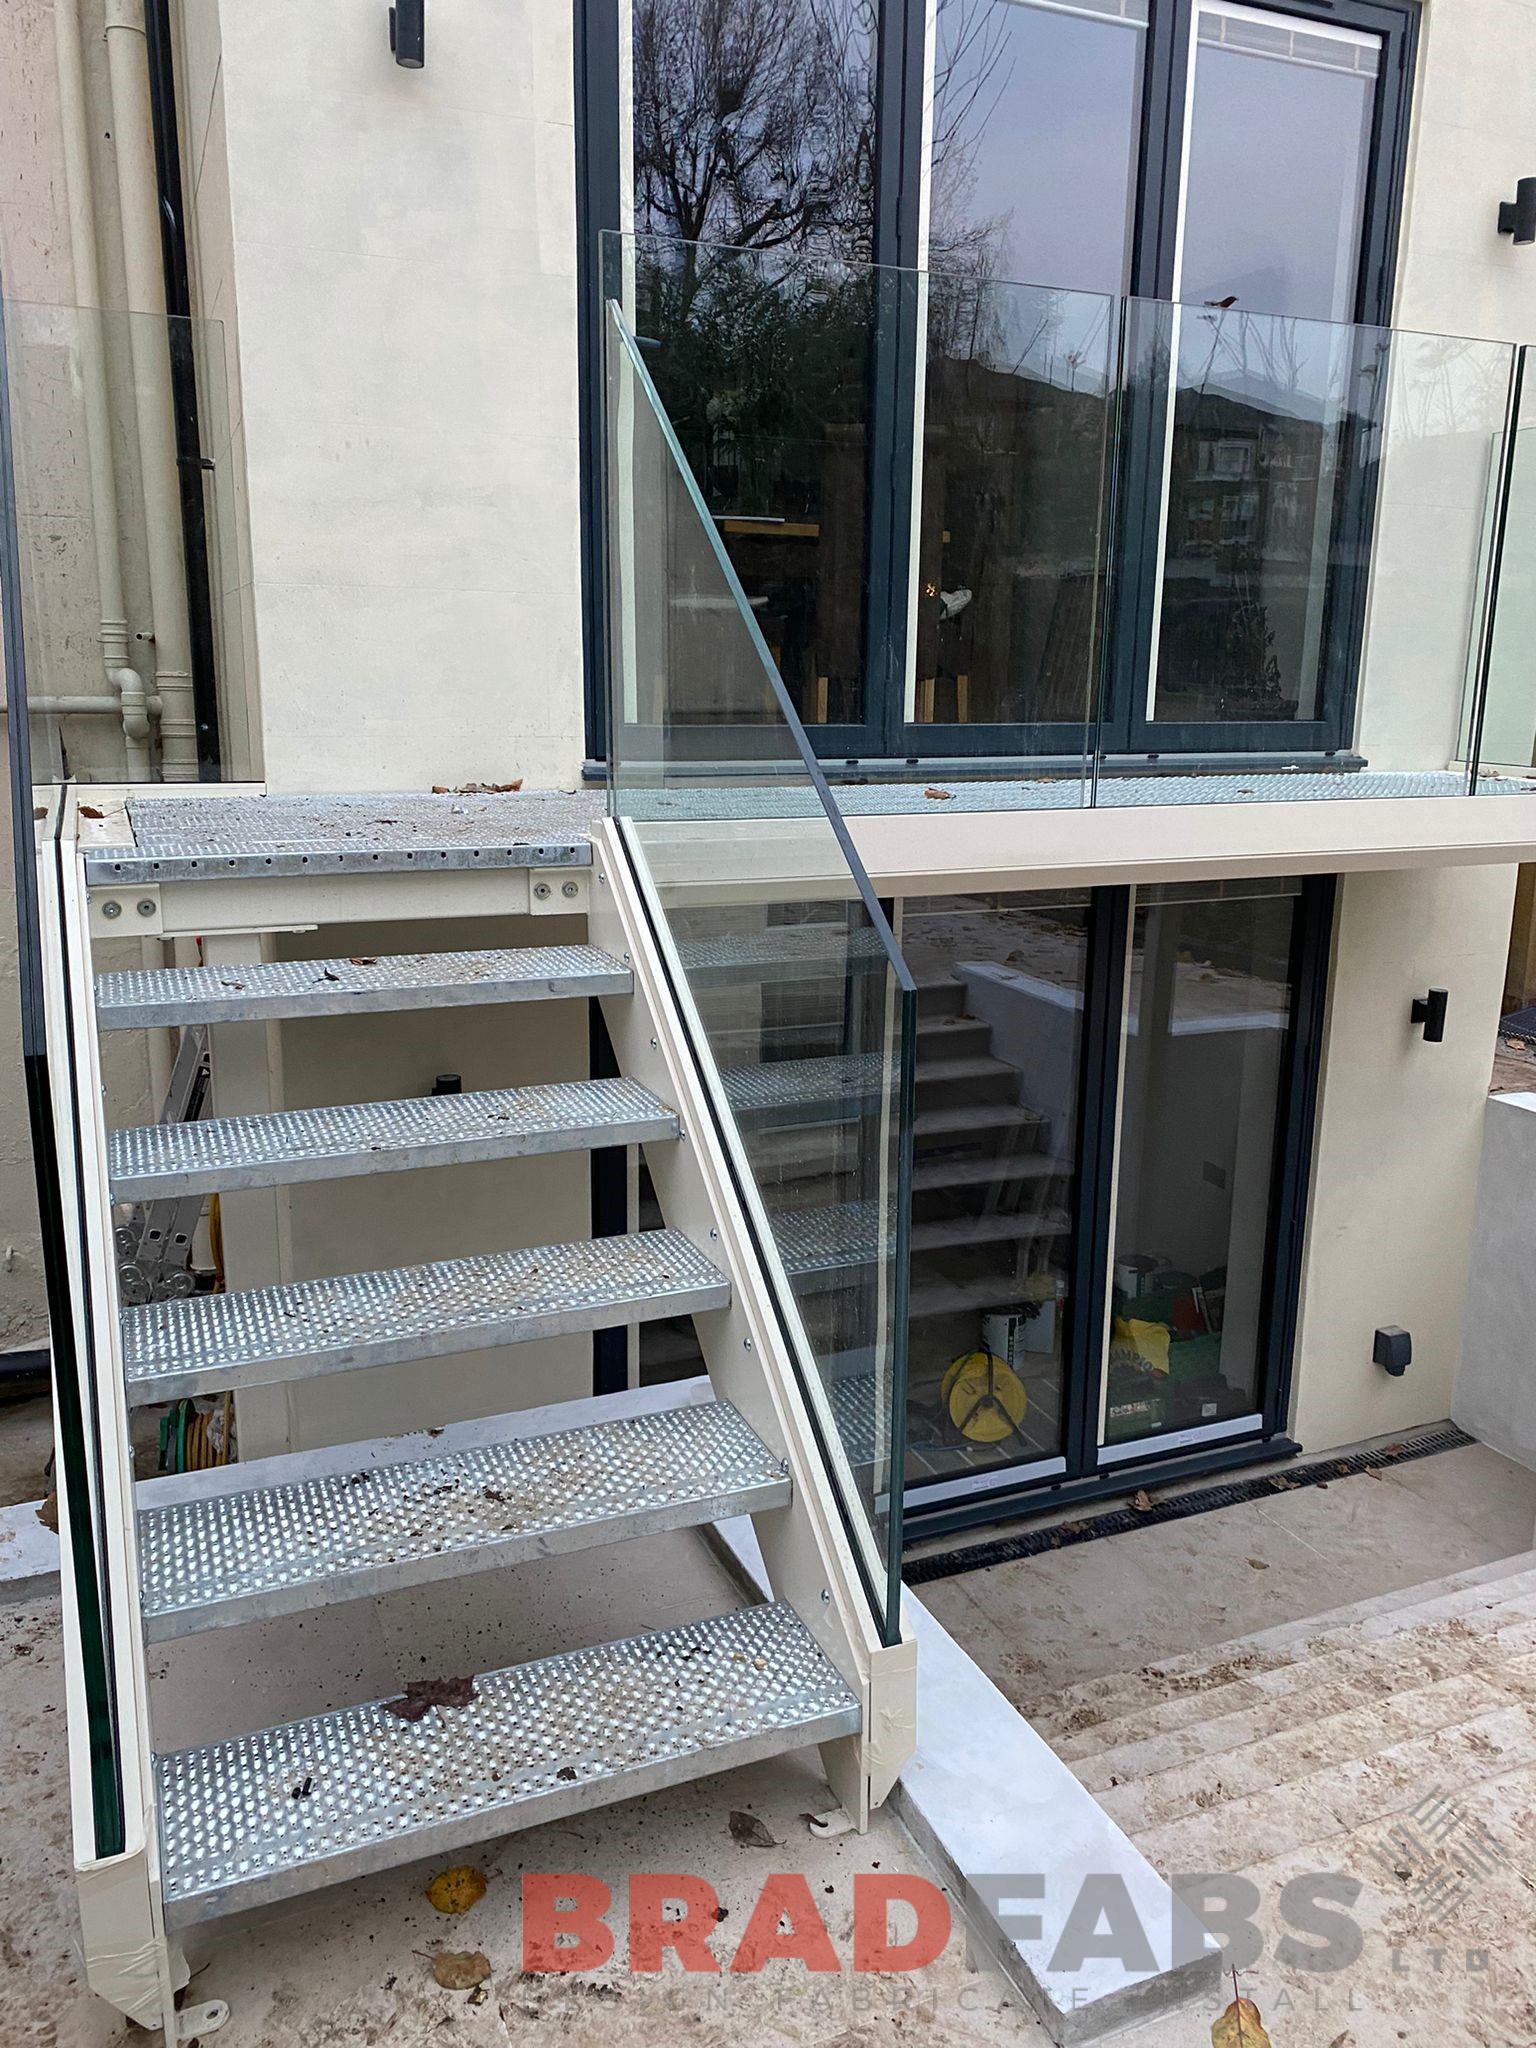 Bradfabs, balcony and staircase, infinity glass, mesh flooring